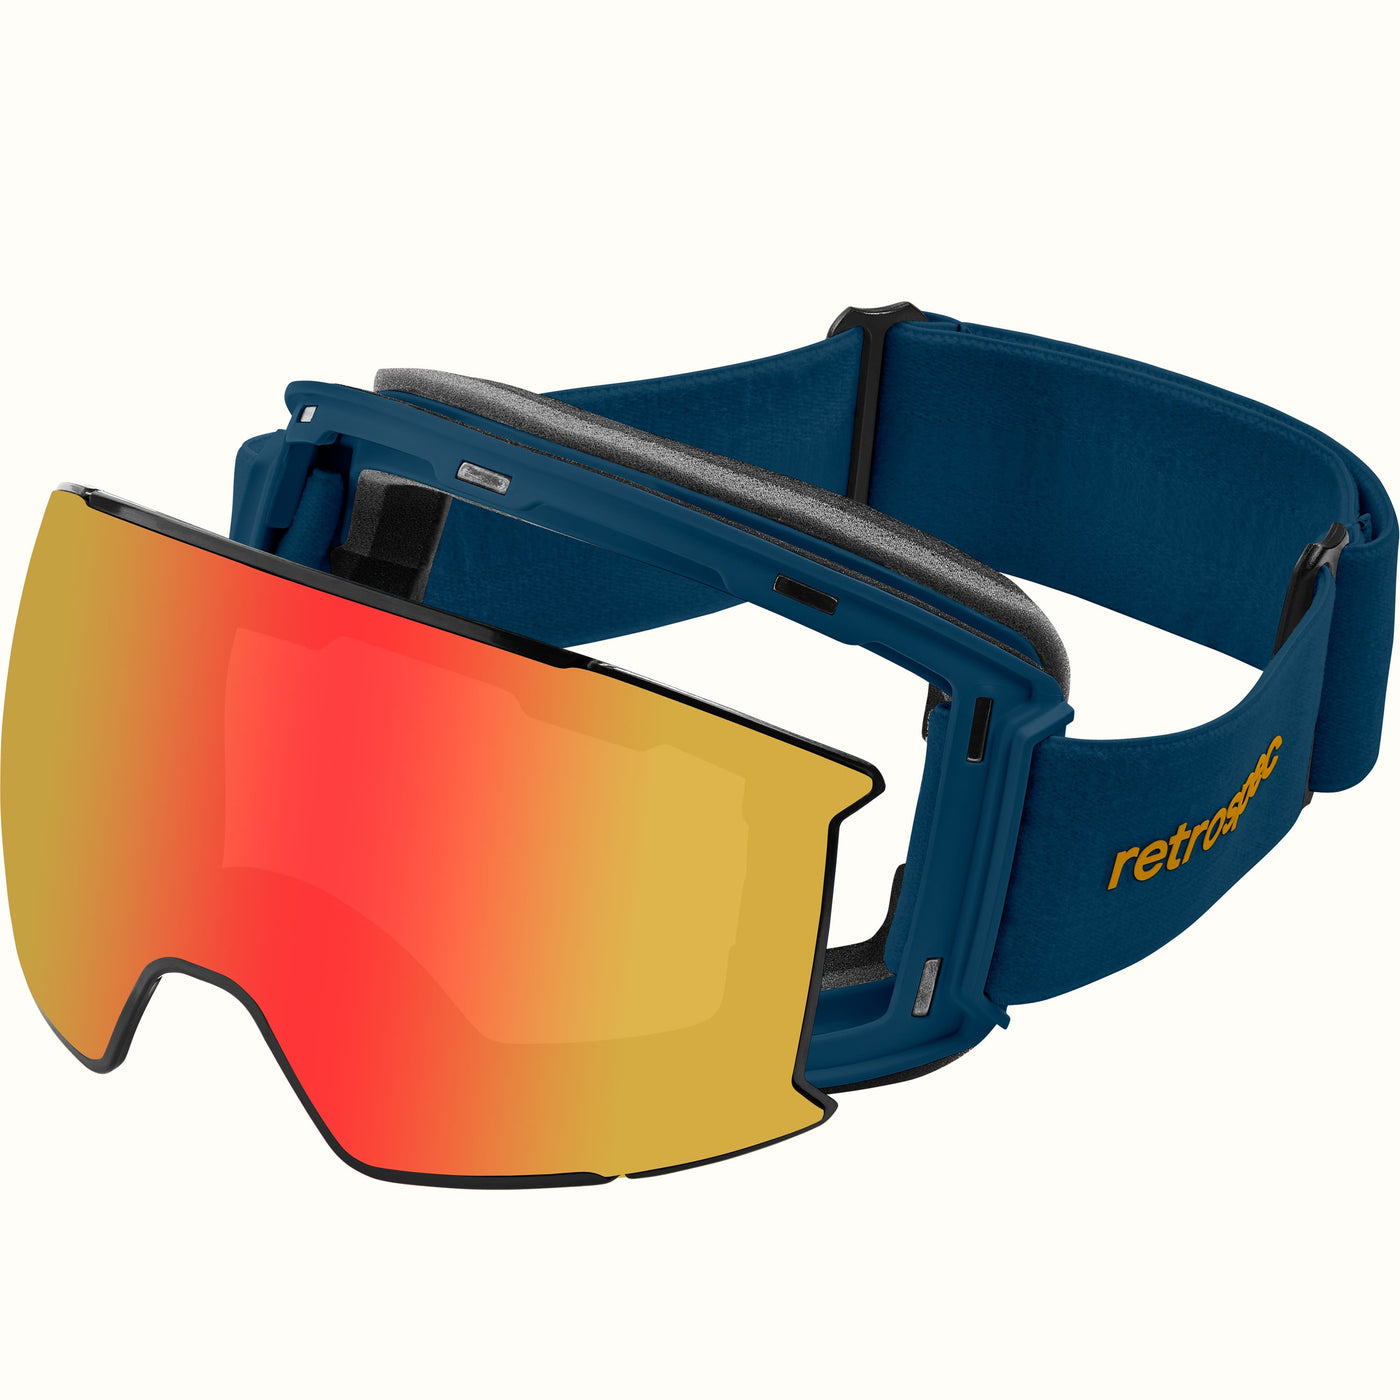 Zenith Ski & Snowboard Goggles | Matte Navy and Heliodor 